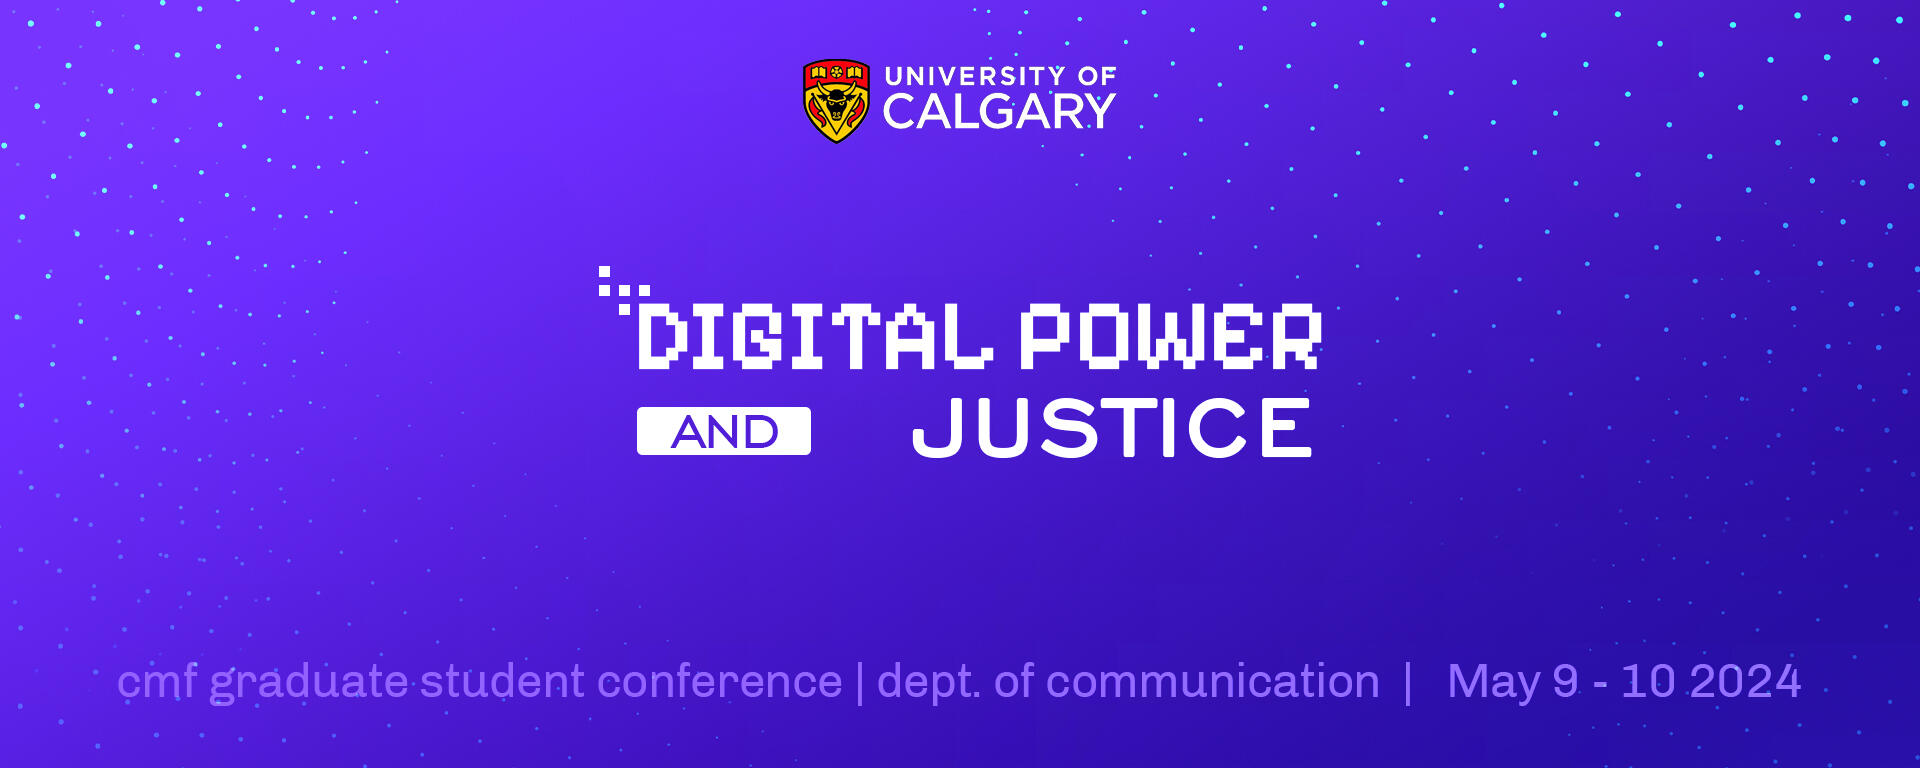 2024 UCalgary CMF Graduate Conference: Digital Power & Justice